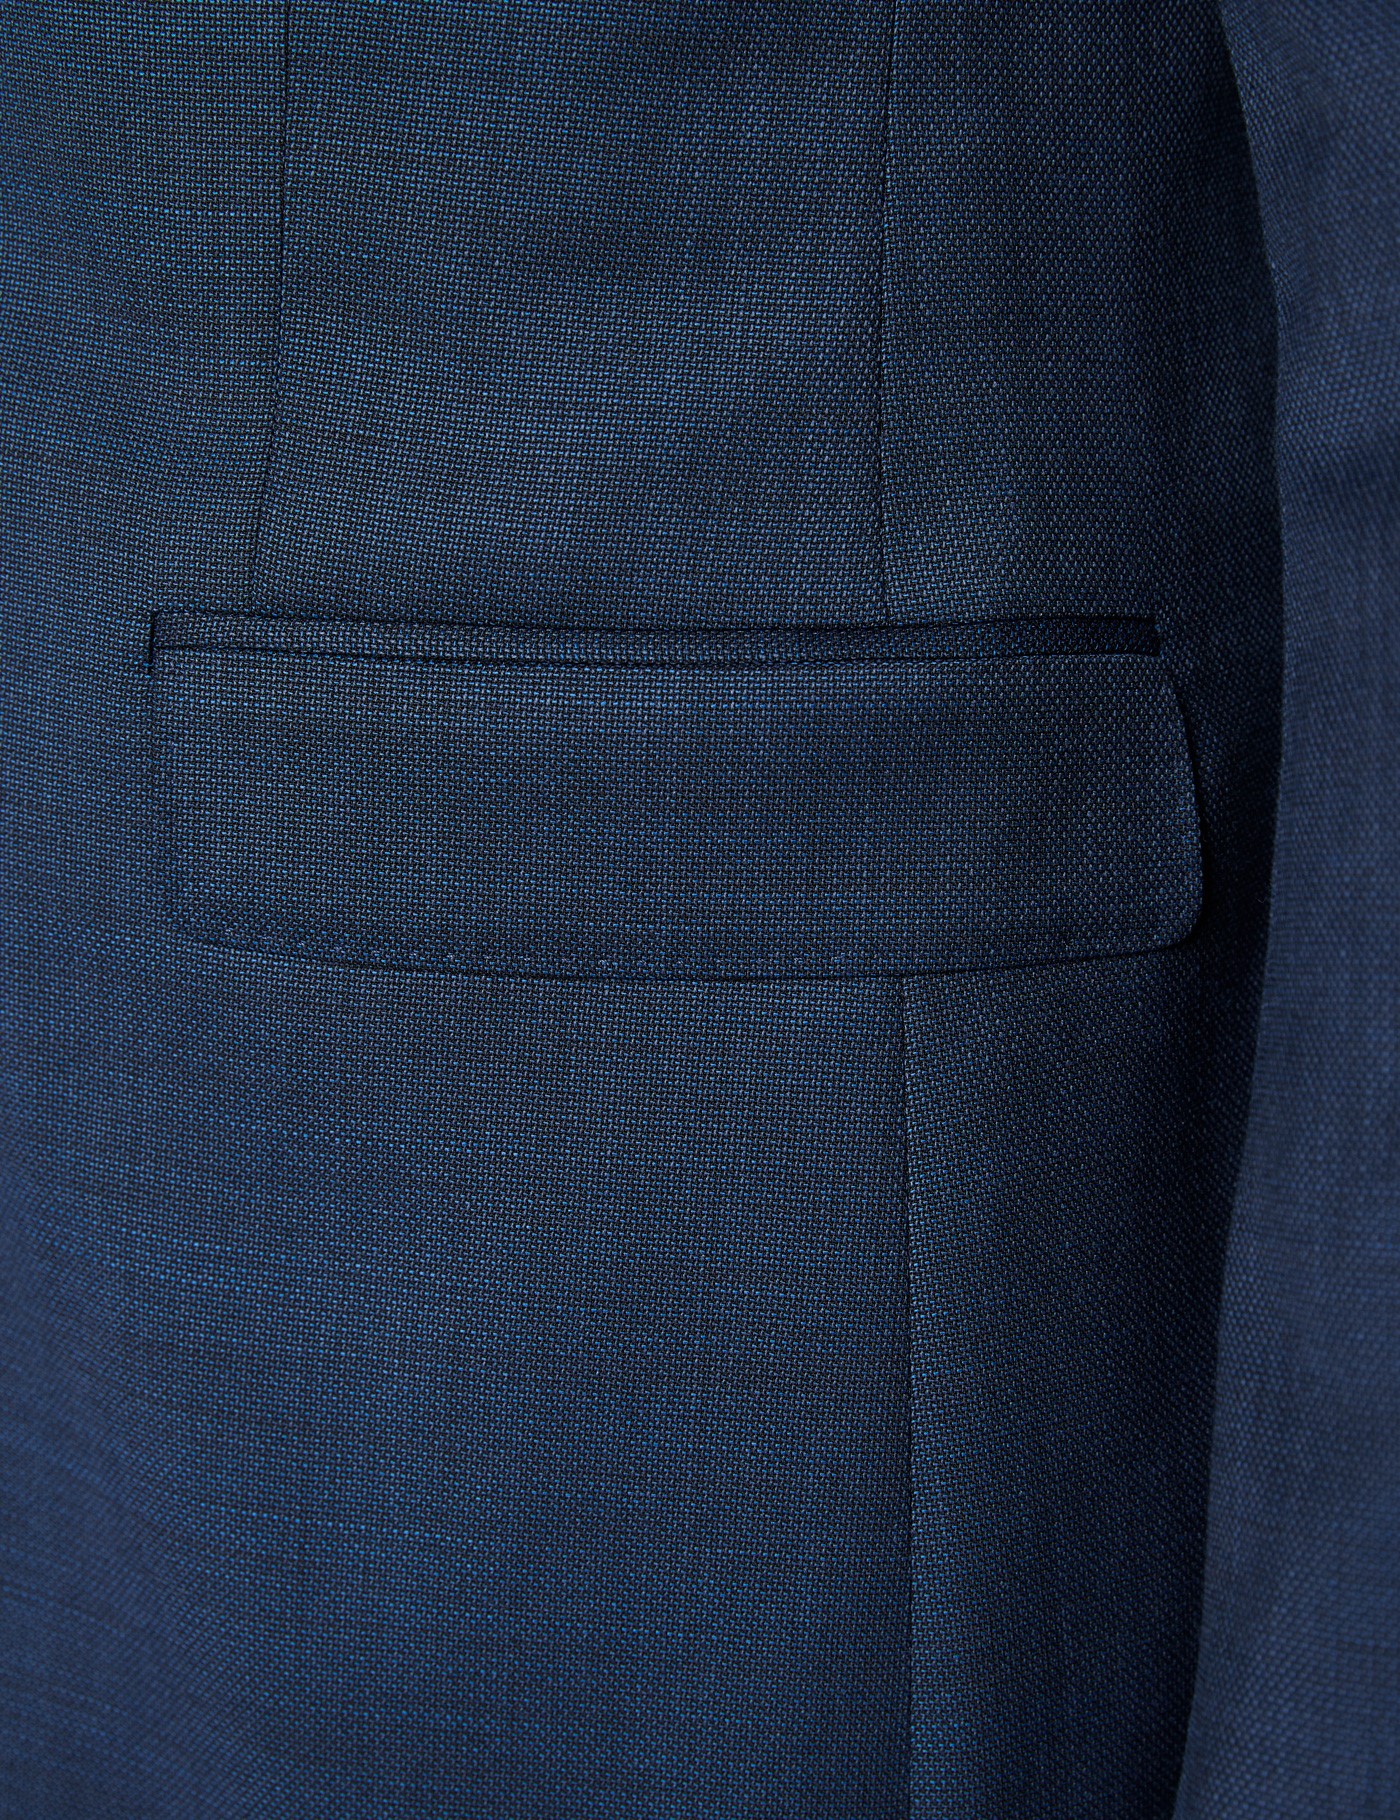 Men's Textured Navy Slim Fit Suit | Hawes & Curtis